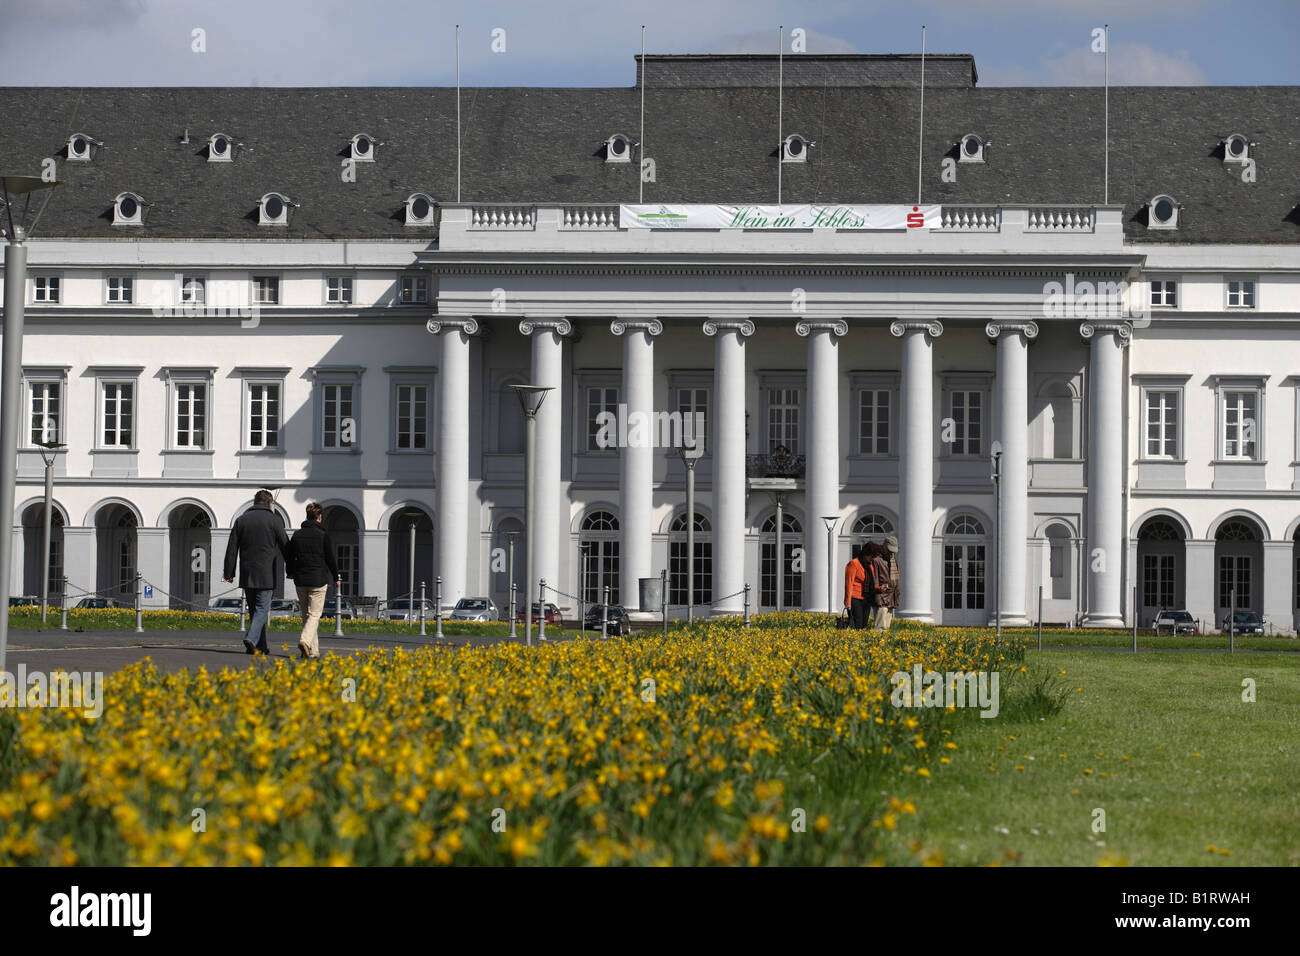 Kurfuersten Schloss, palace of the prince electors, Koblenz, Rhineland-Palatinate, Germany, Europe Stock Photo